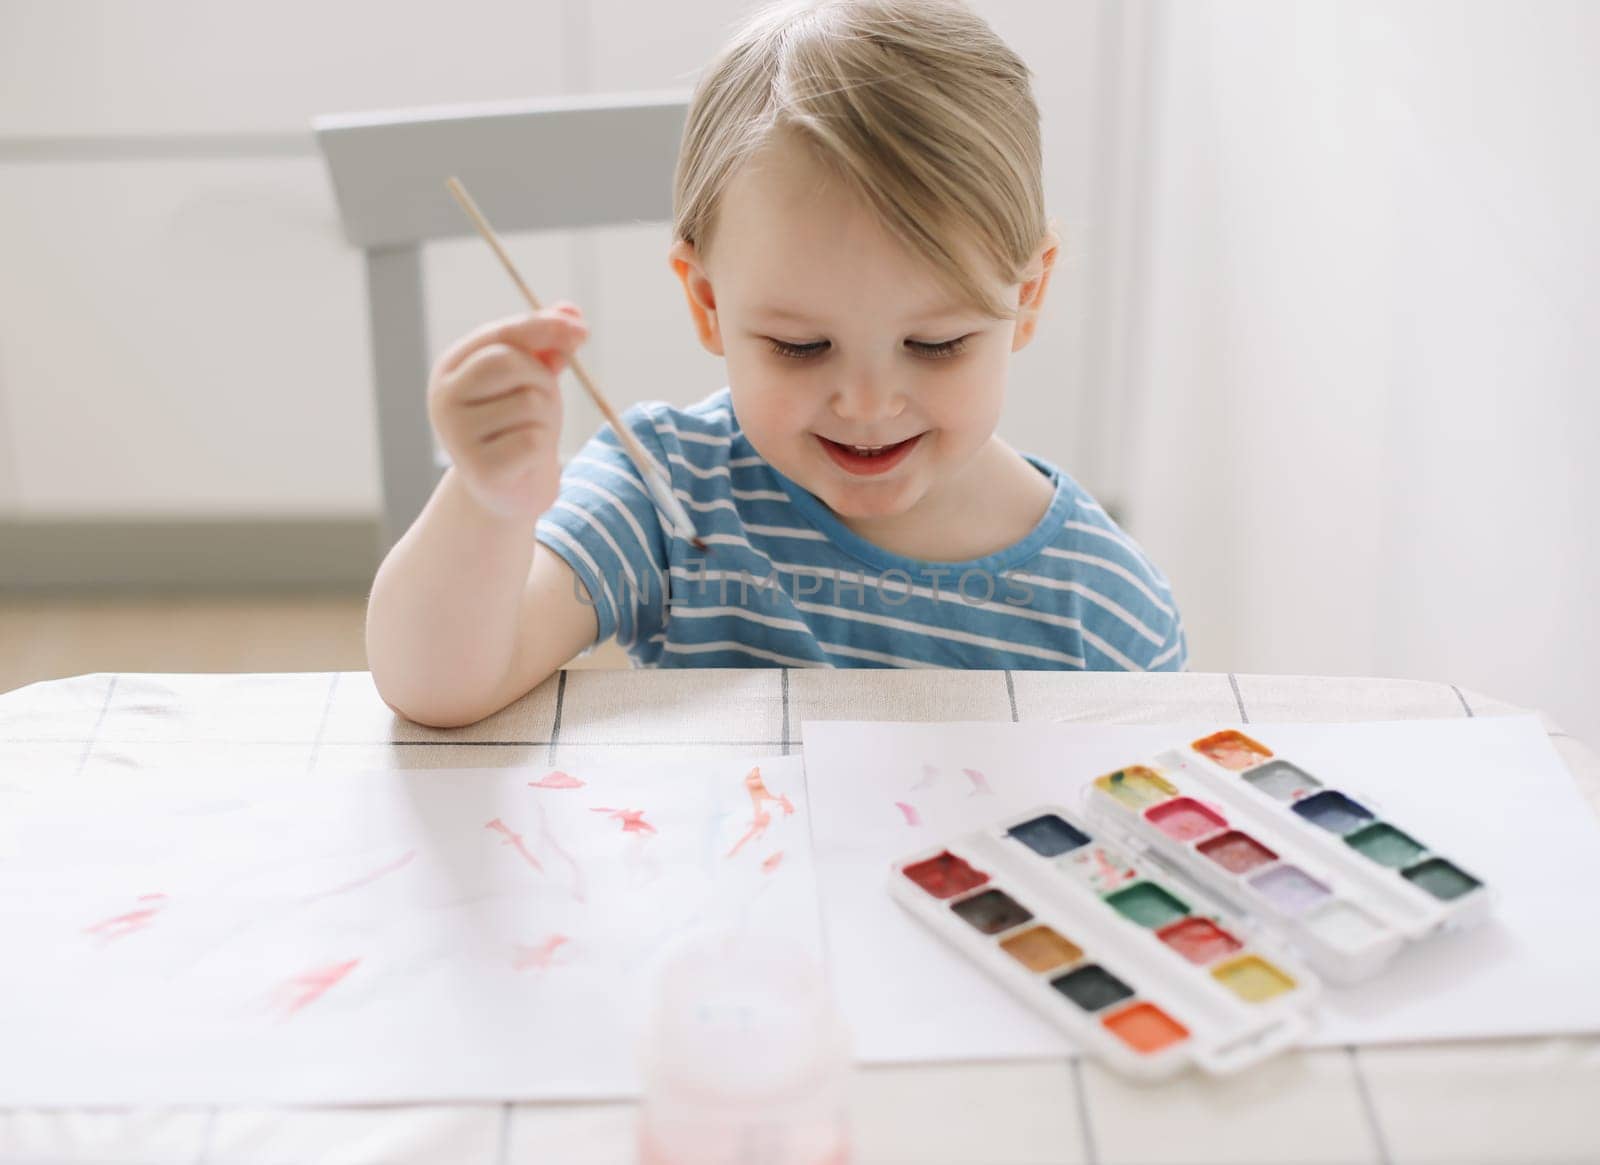 Small preschooler girl sit at desk painting, quarantine, homeschooling concept